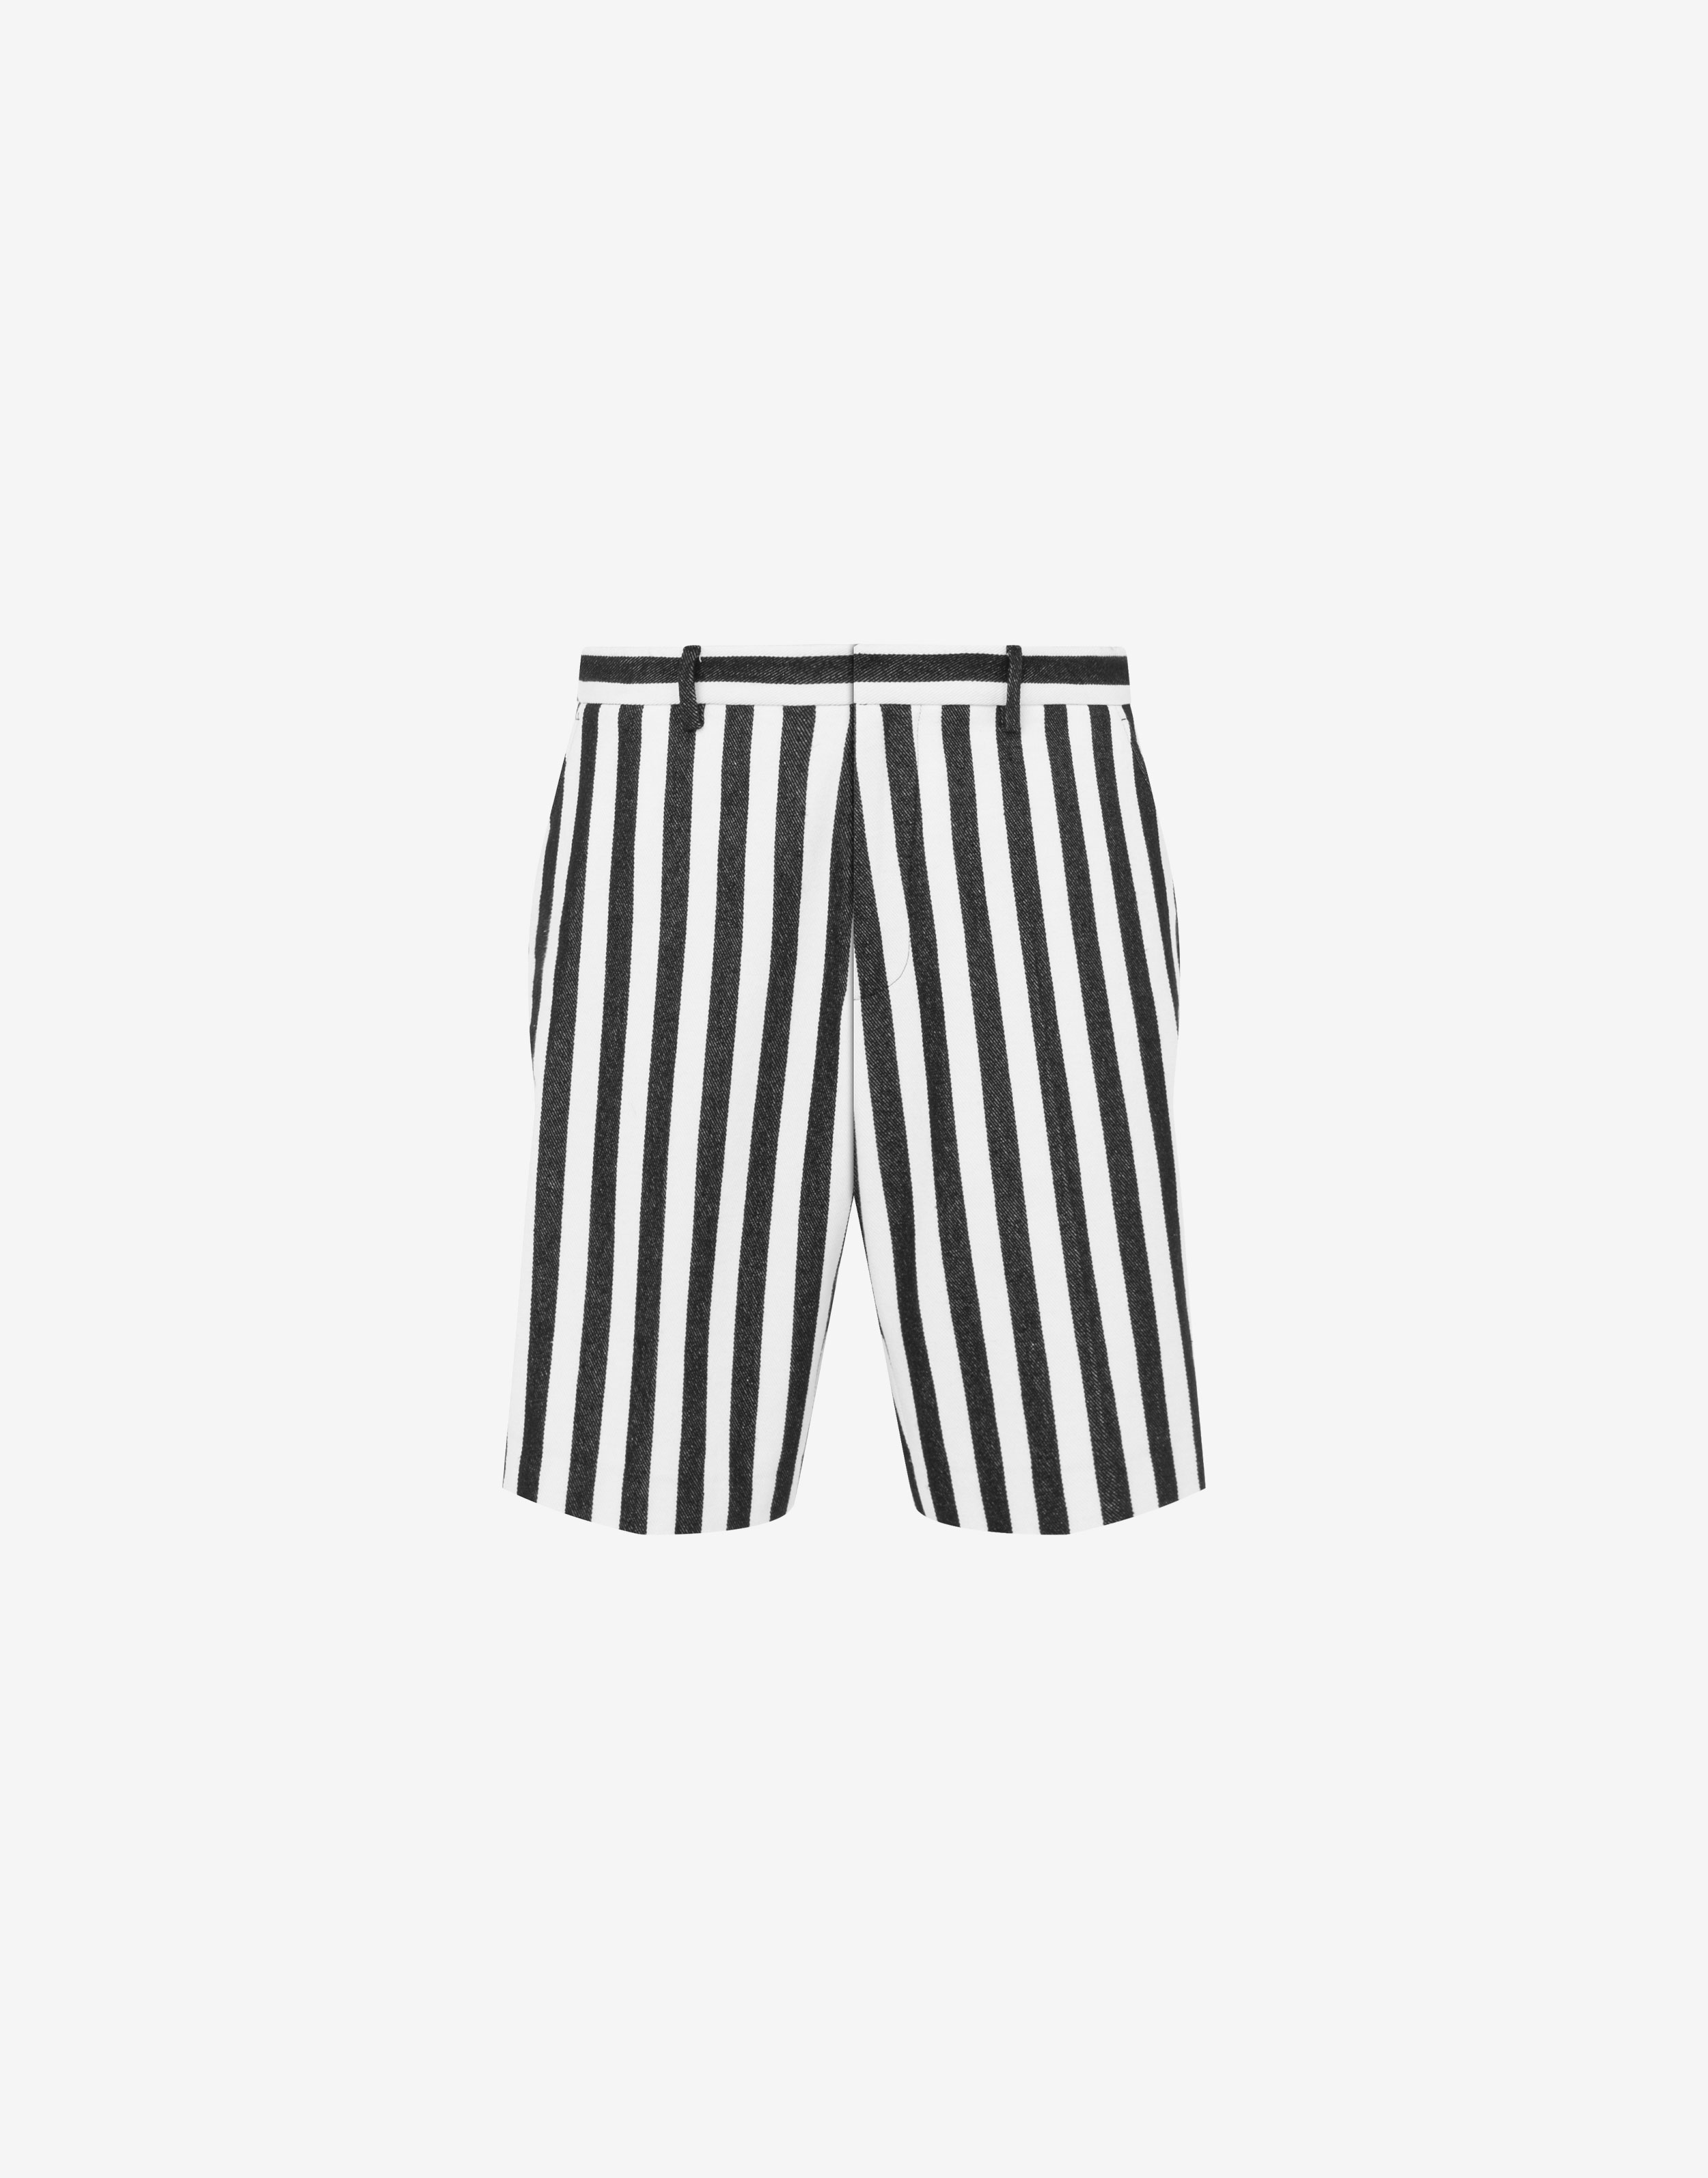 Moschino Underwear Black Logo Track Pants, Size Large A4312-8107-1489 -  Apparel - Jomashop